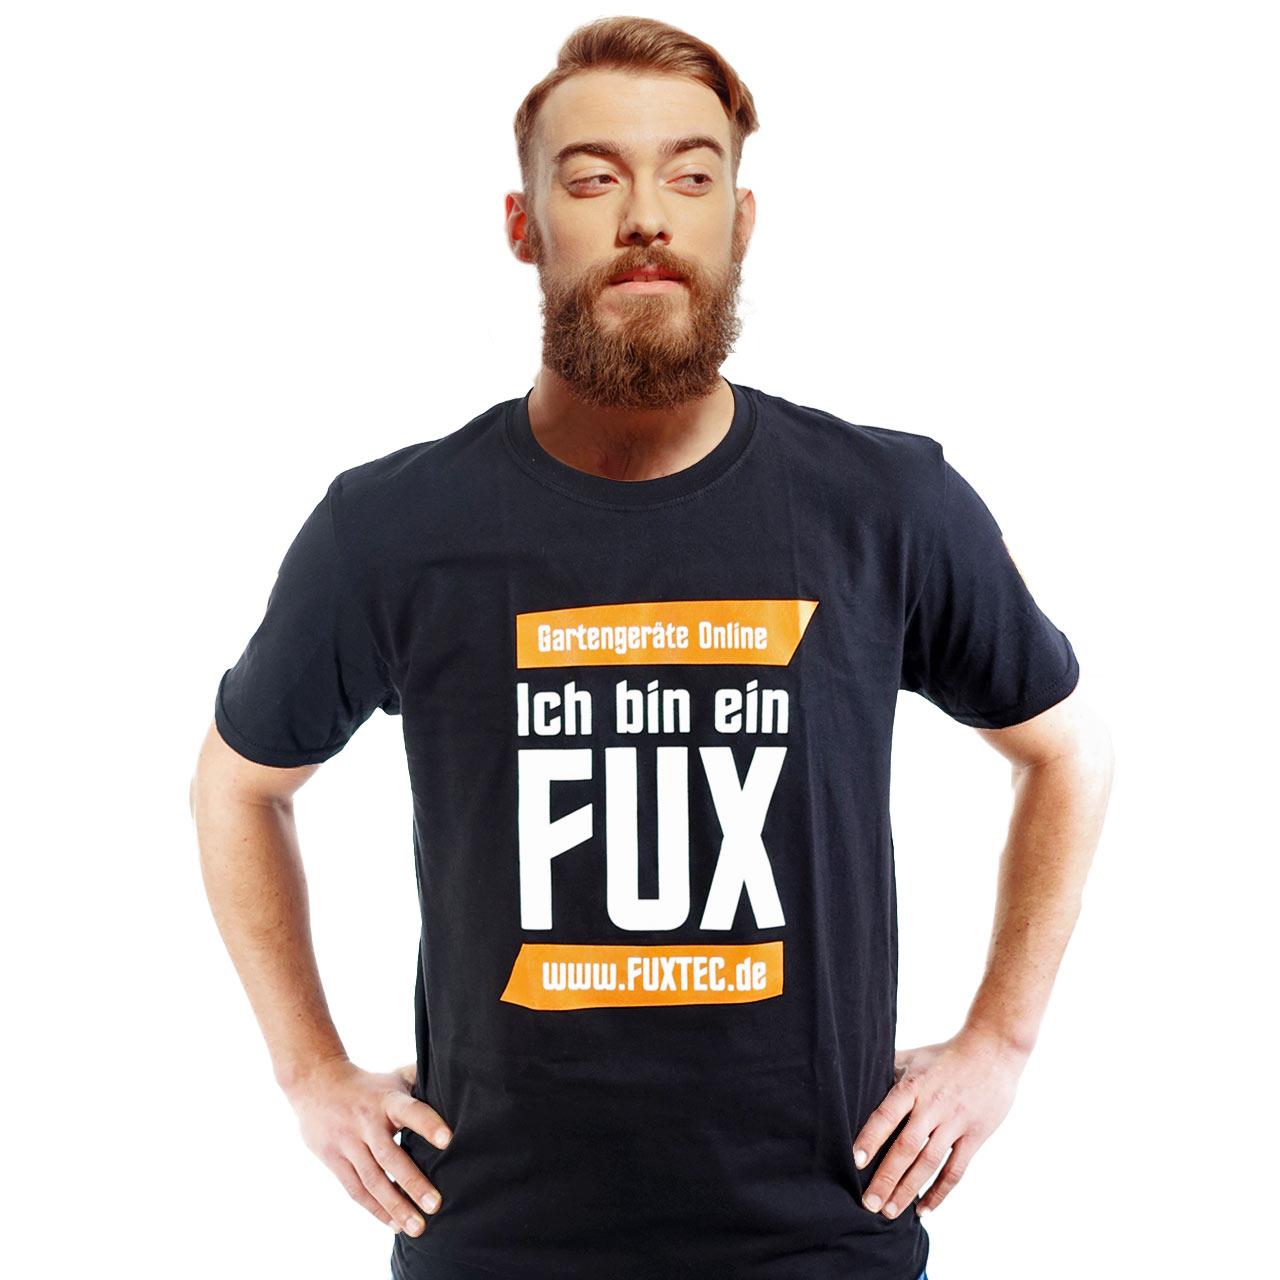 FUXTEC T-Shirt - Ich bin ein FUX